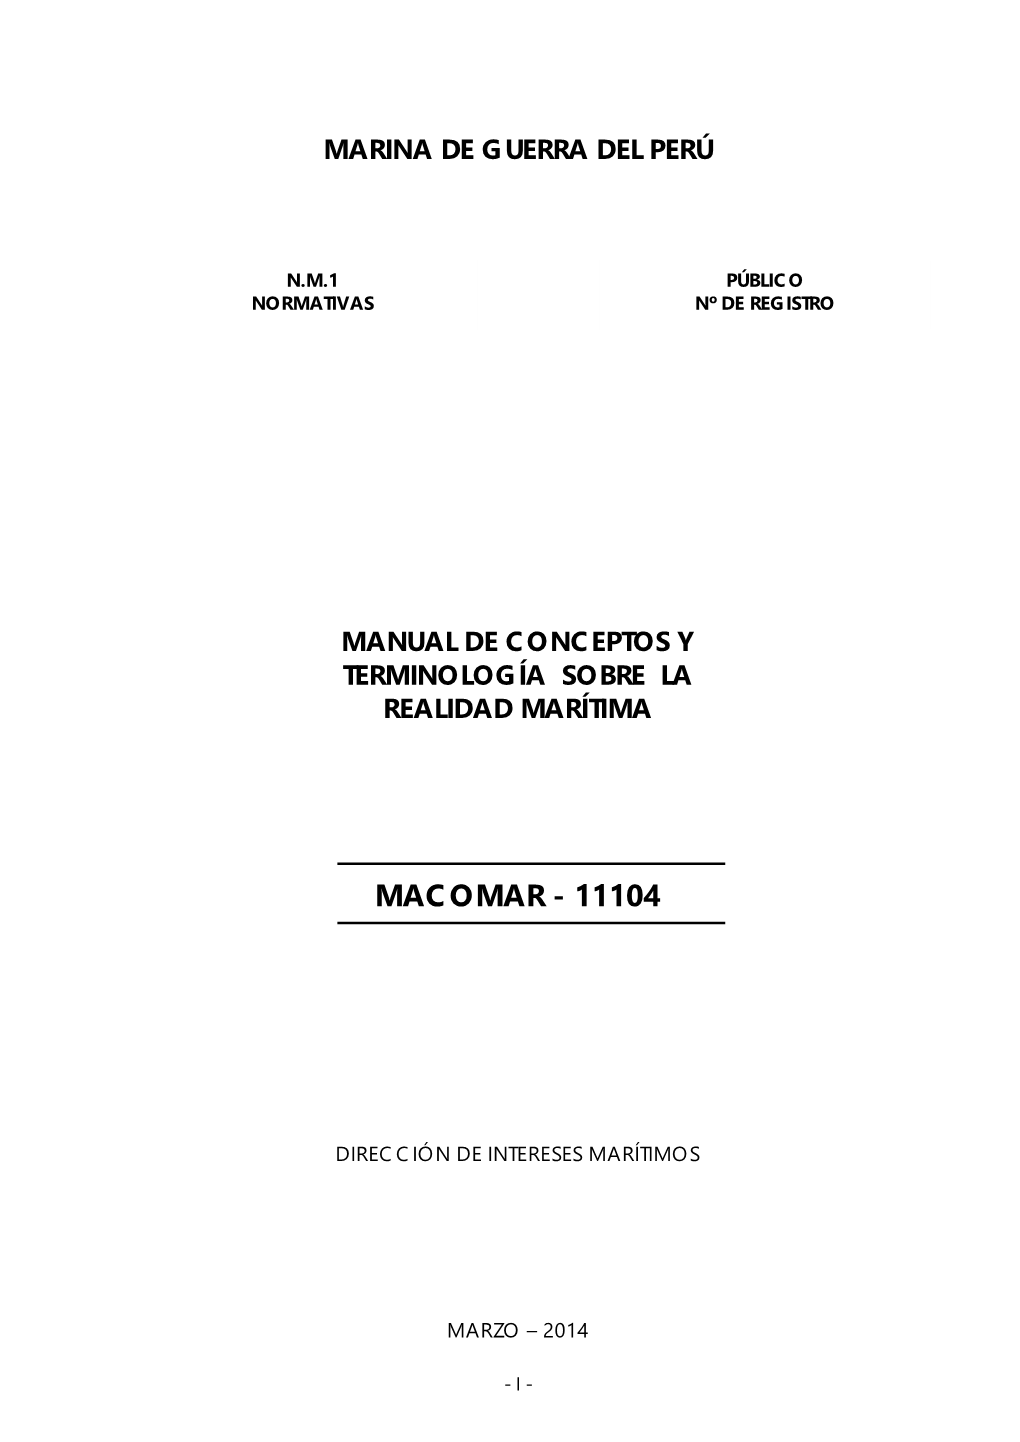 Macomar - 11104